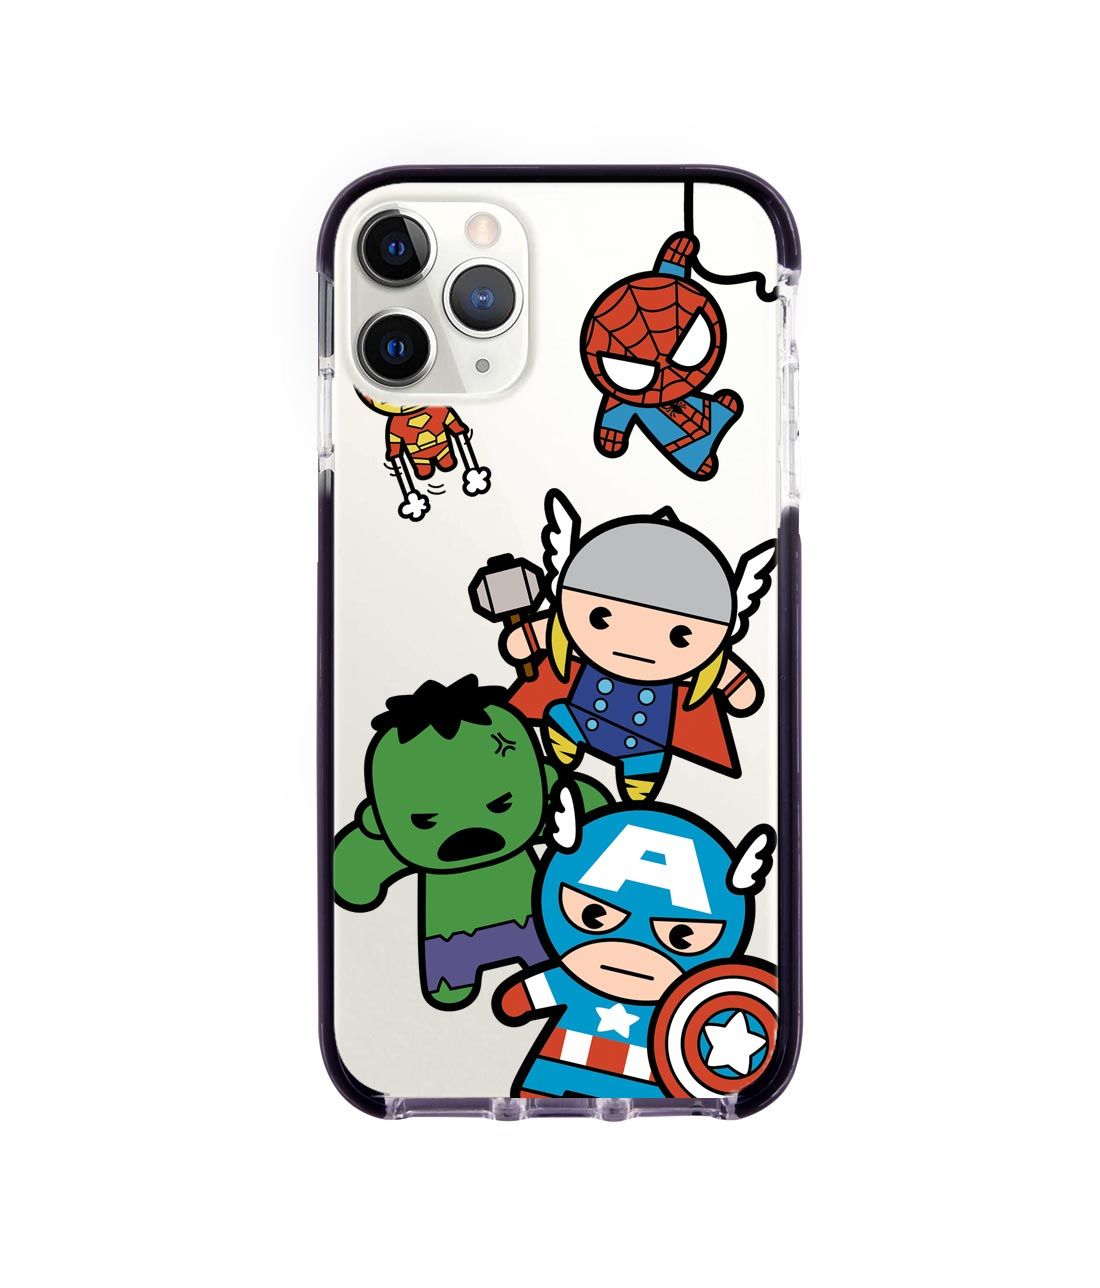 Kawaii Art Marvel Comics - Extreme Phone Case for iPhone 11 Pro